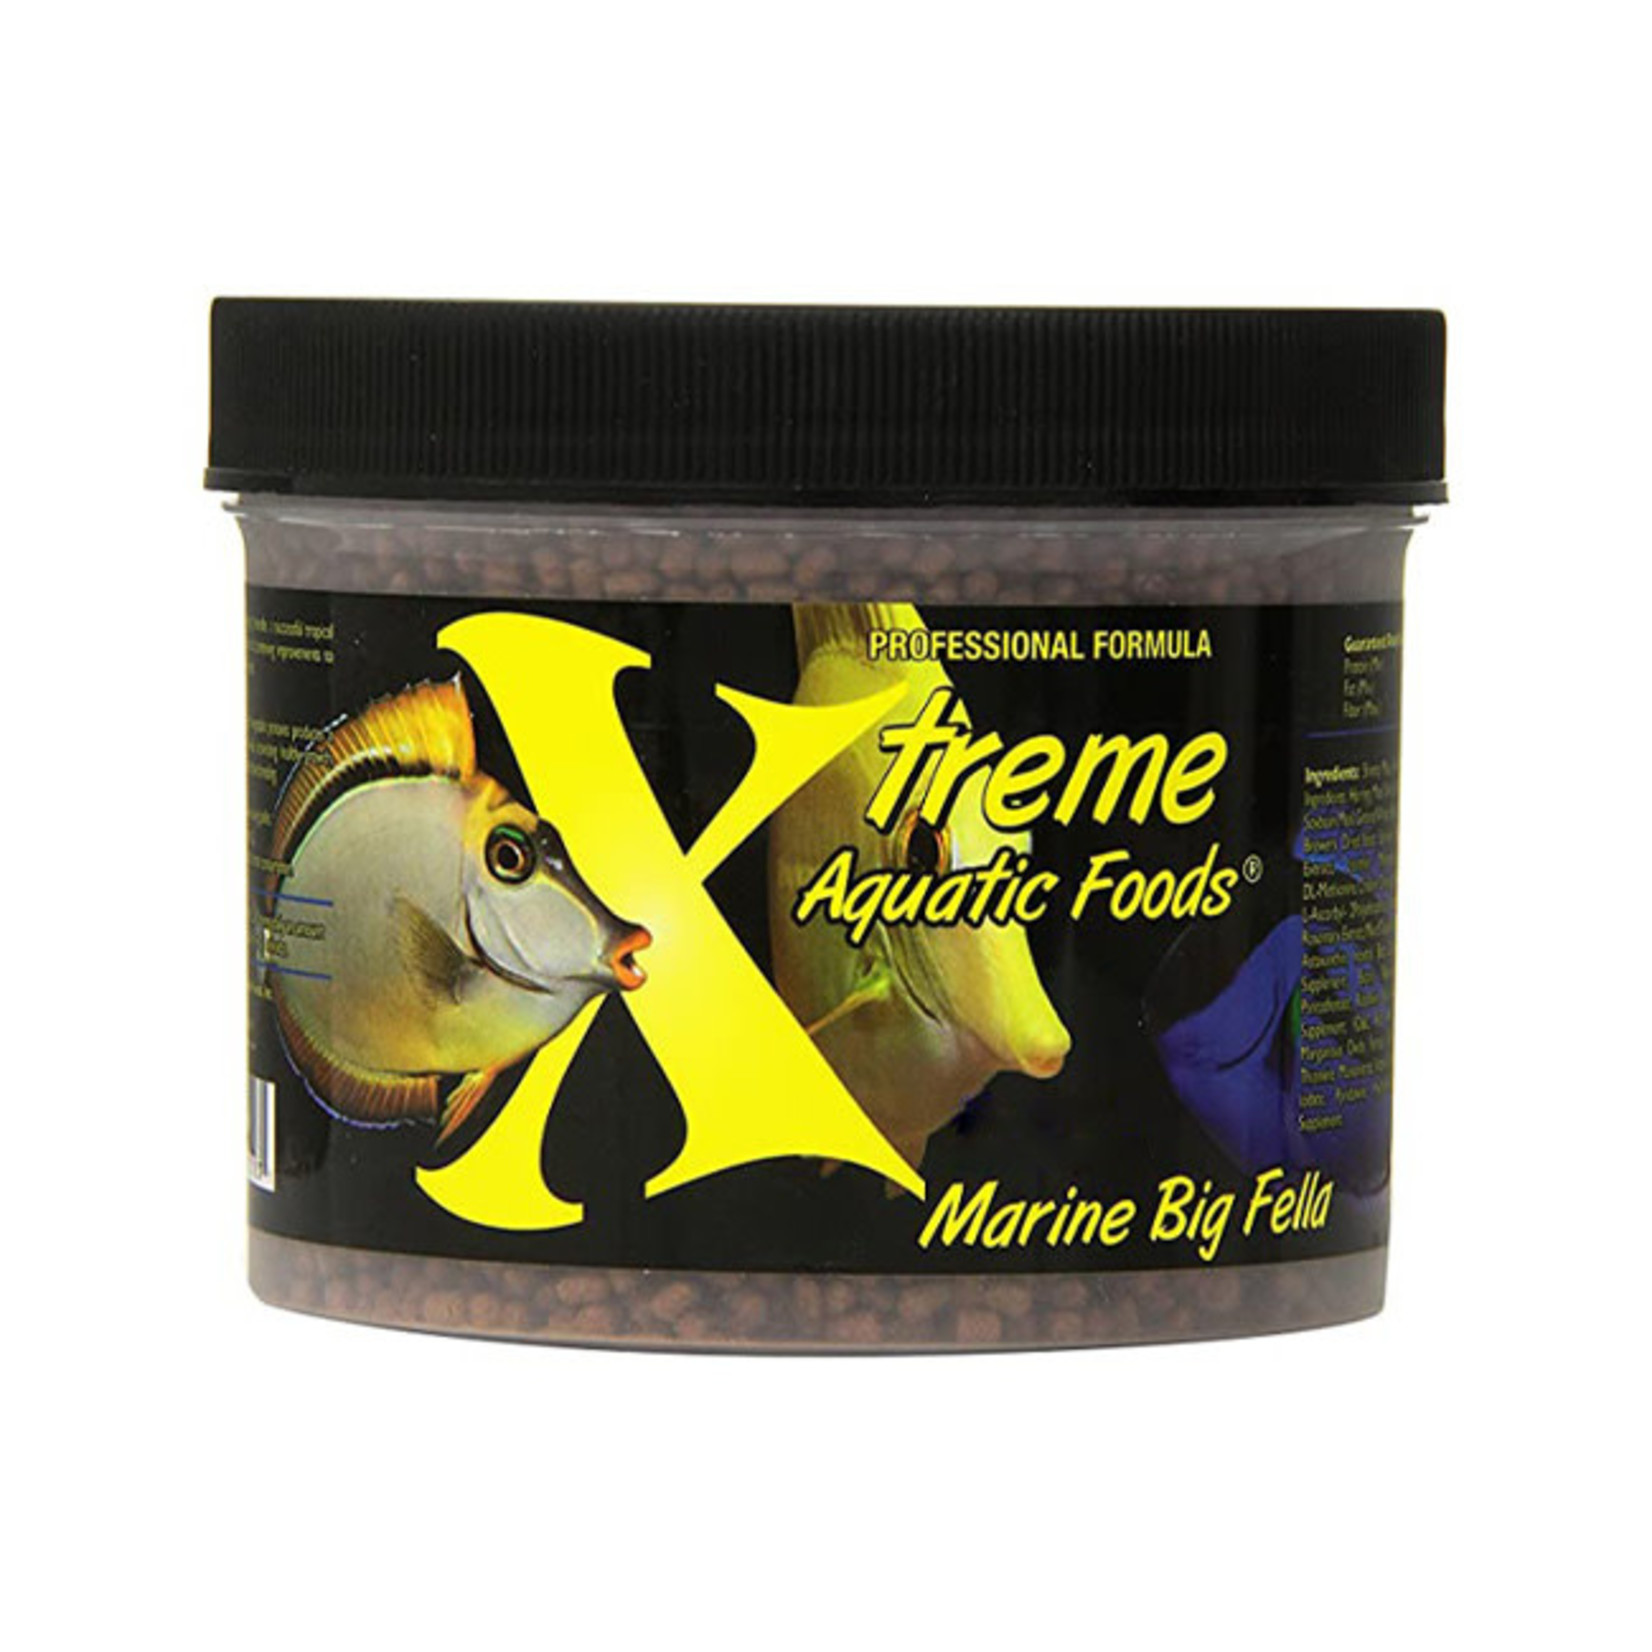 Xtreme Aquatic Foods Xtreme Marine Big Fella